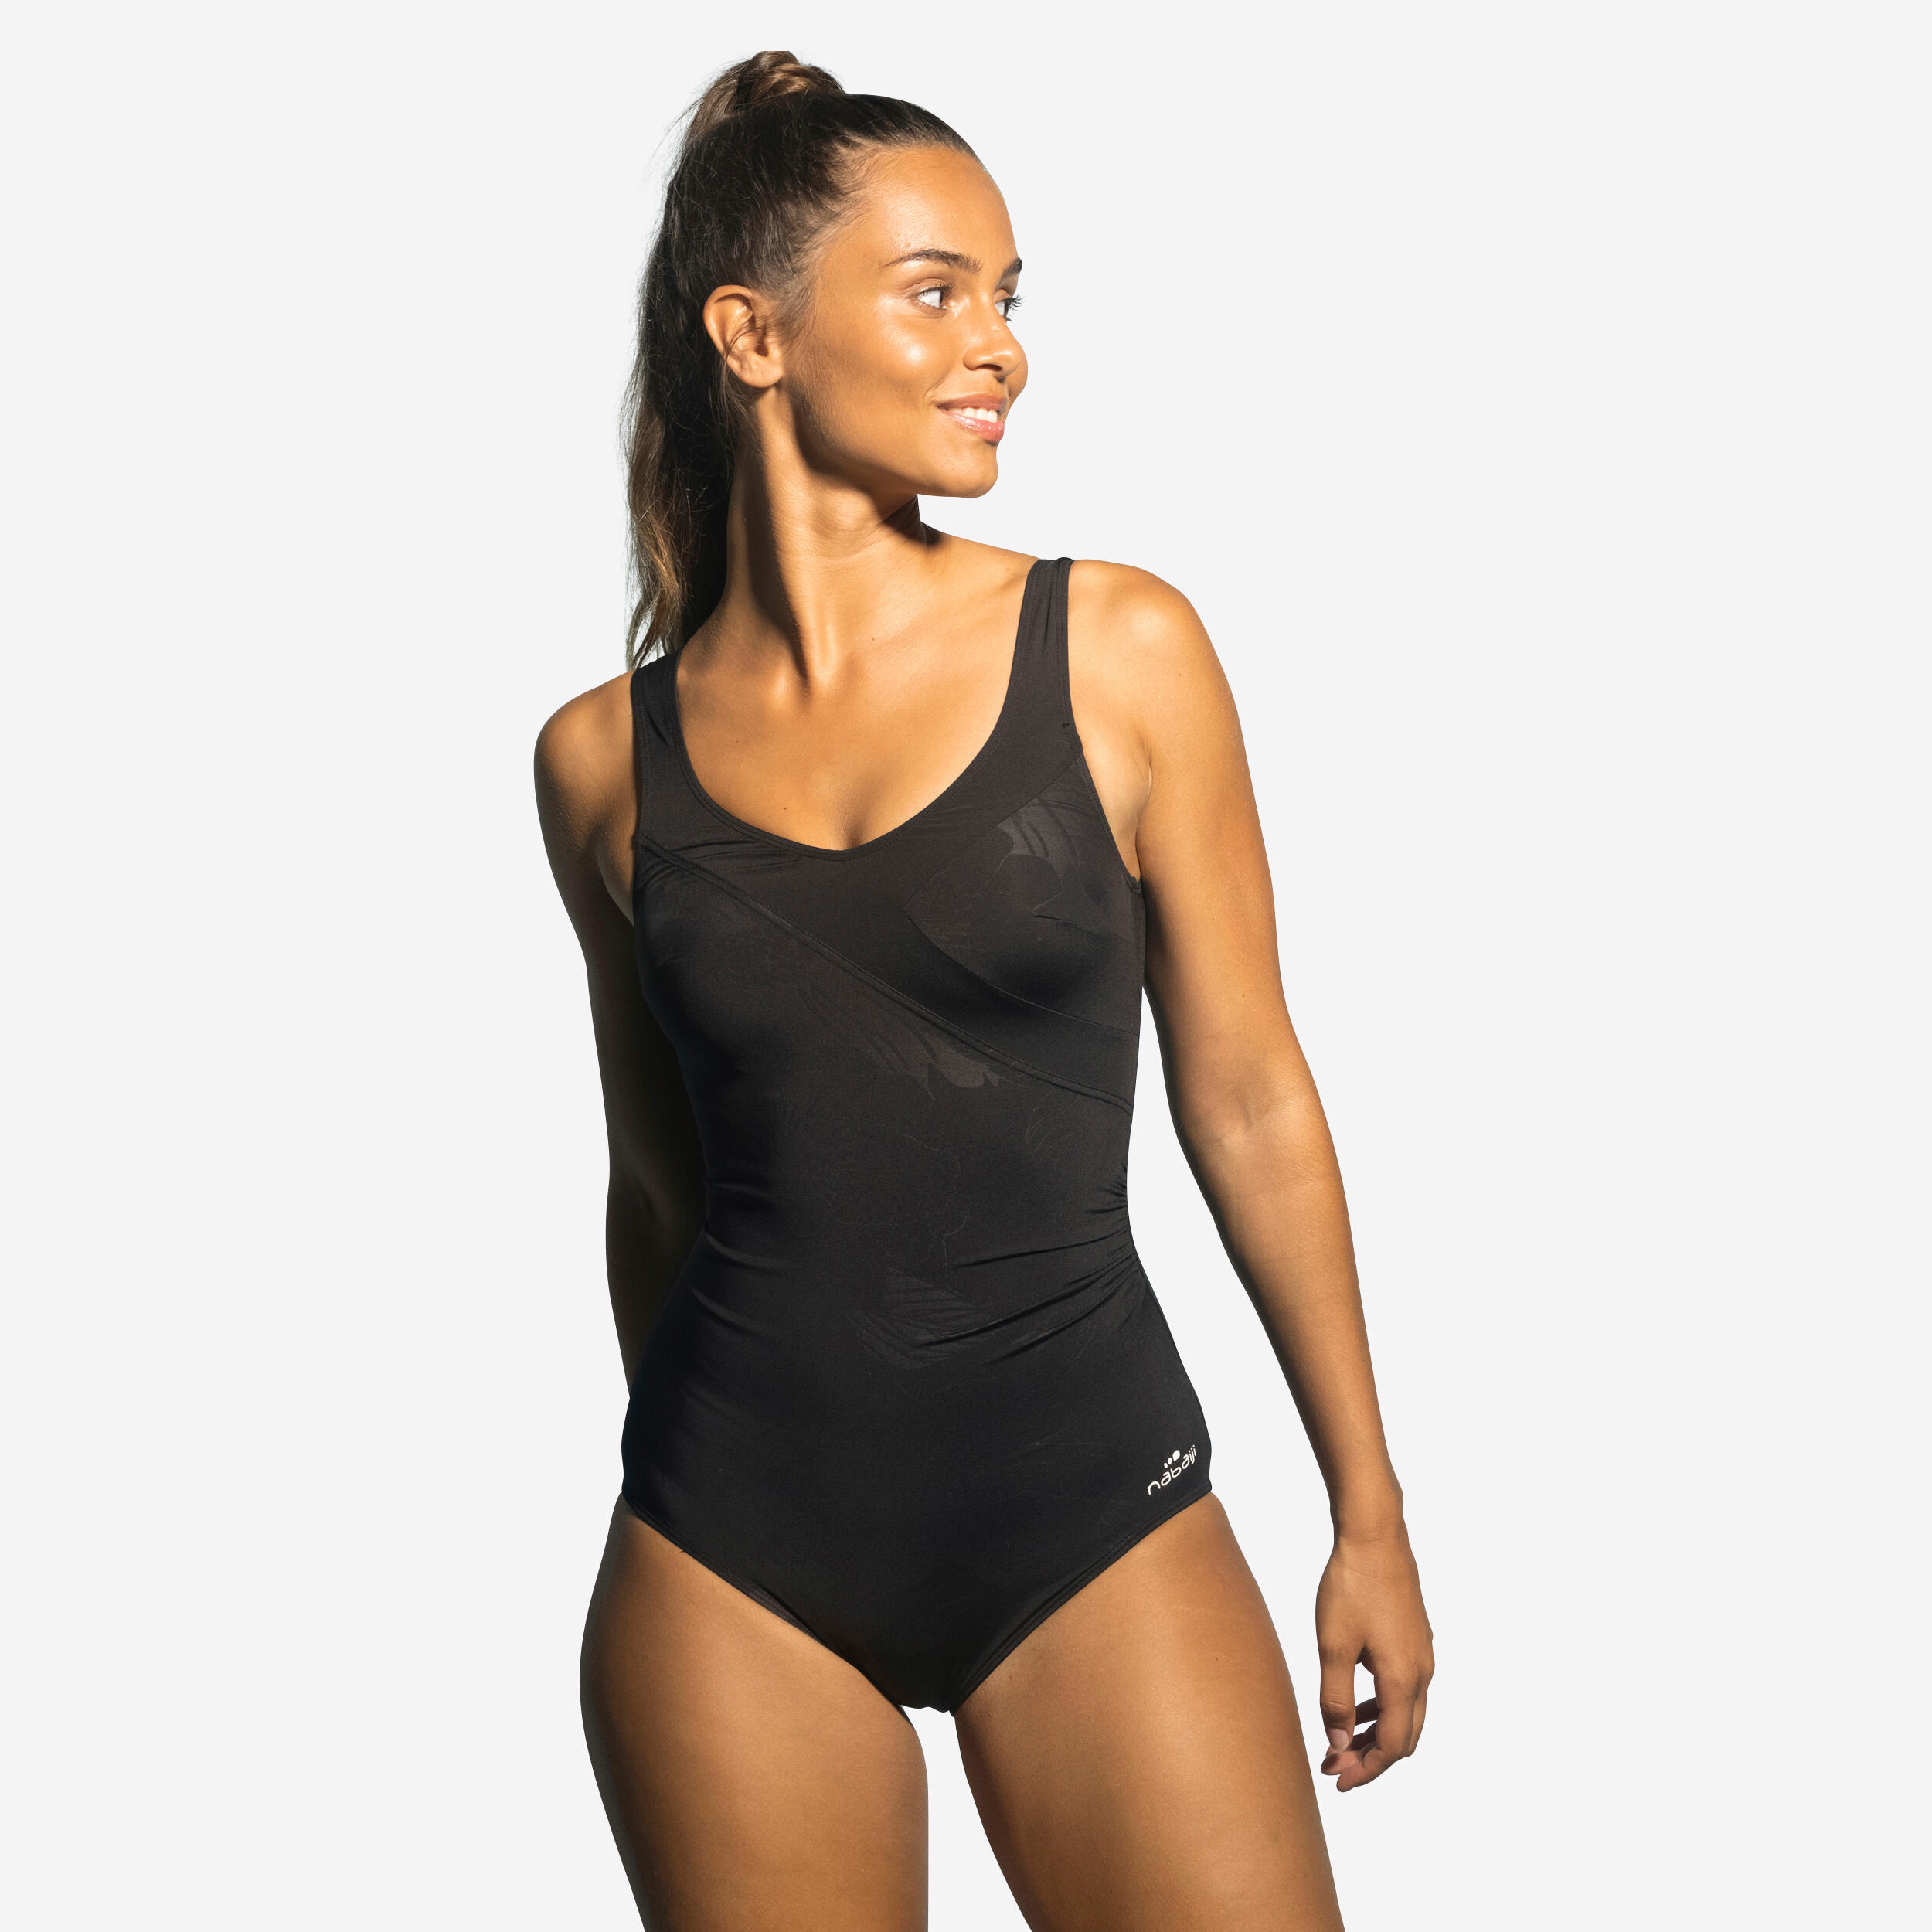 Women's Aquafitness 1-Piece Swimsuit - Karly Black - NABAIJI